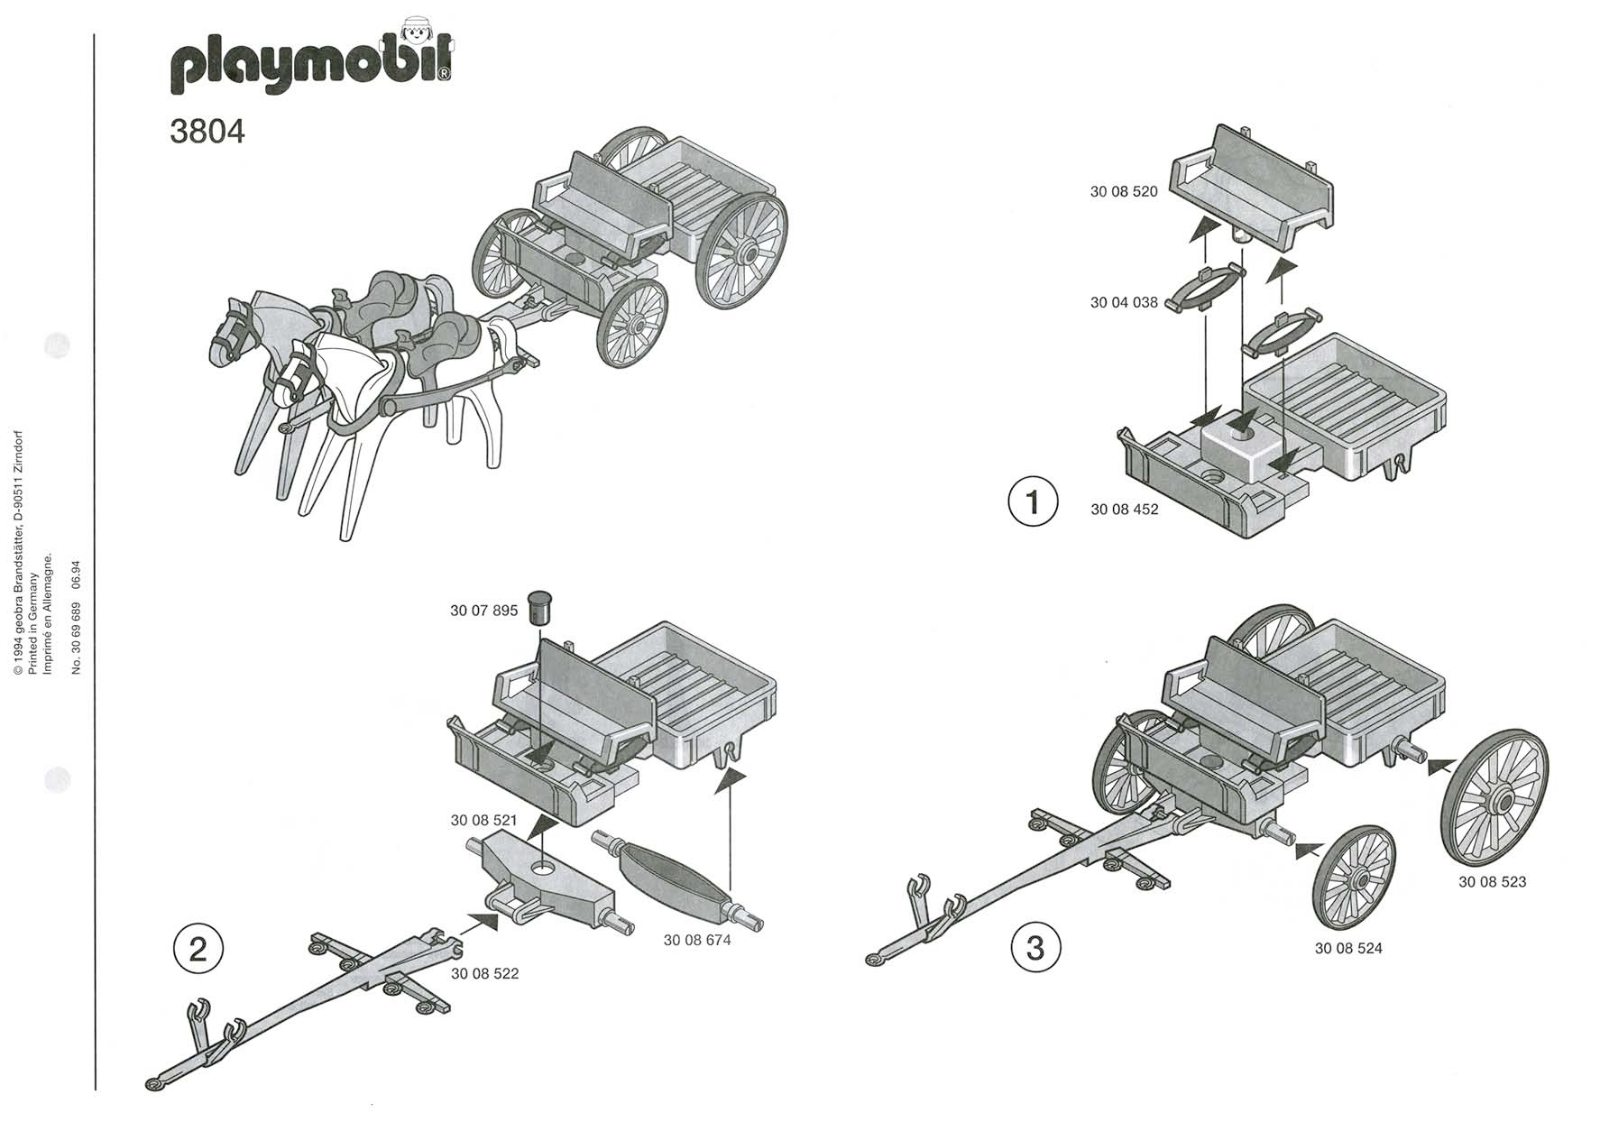 Playmobil 3804 Instructions